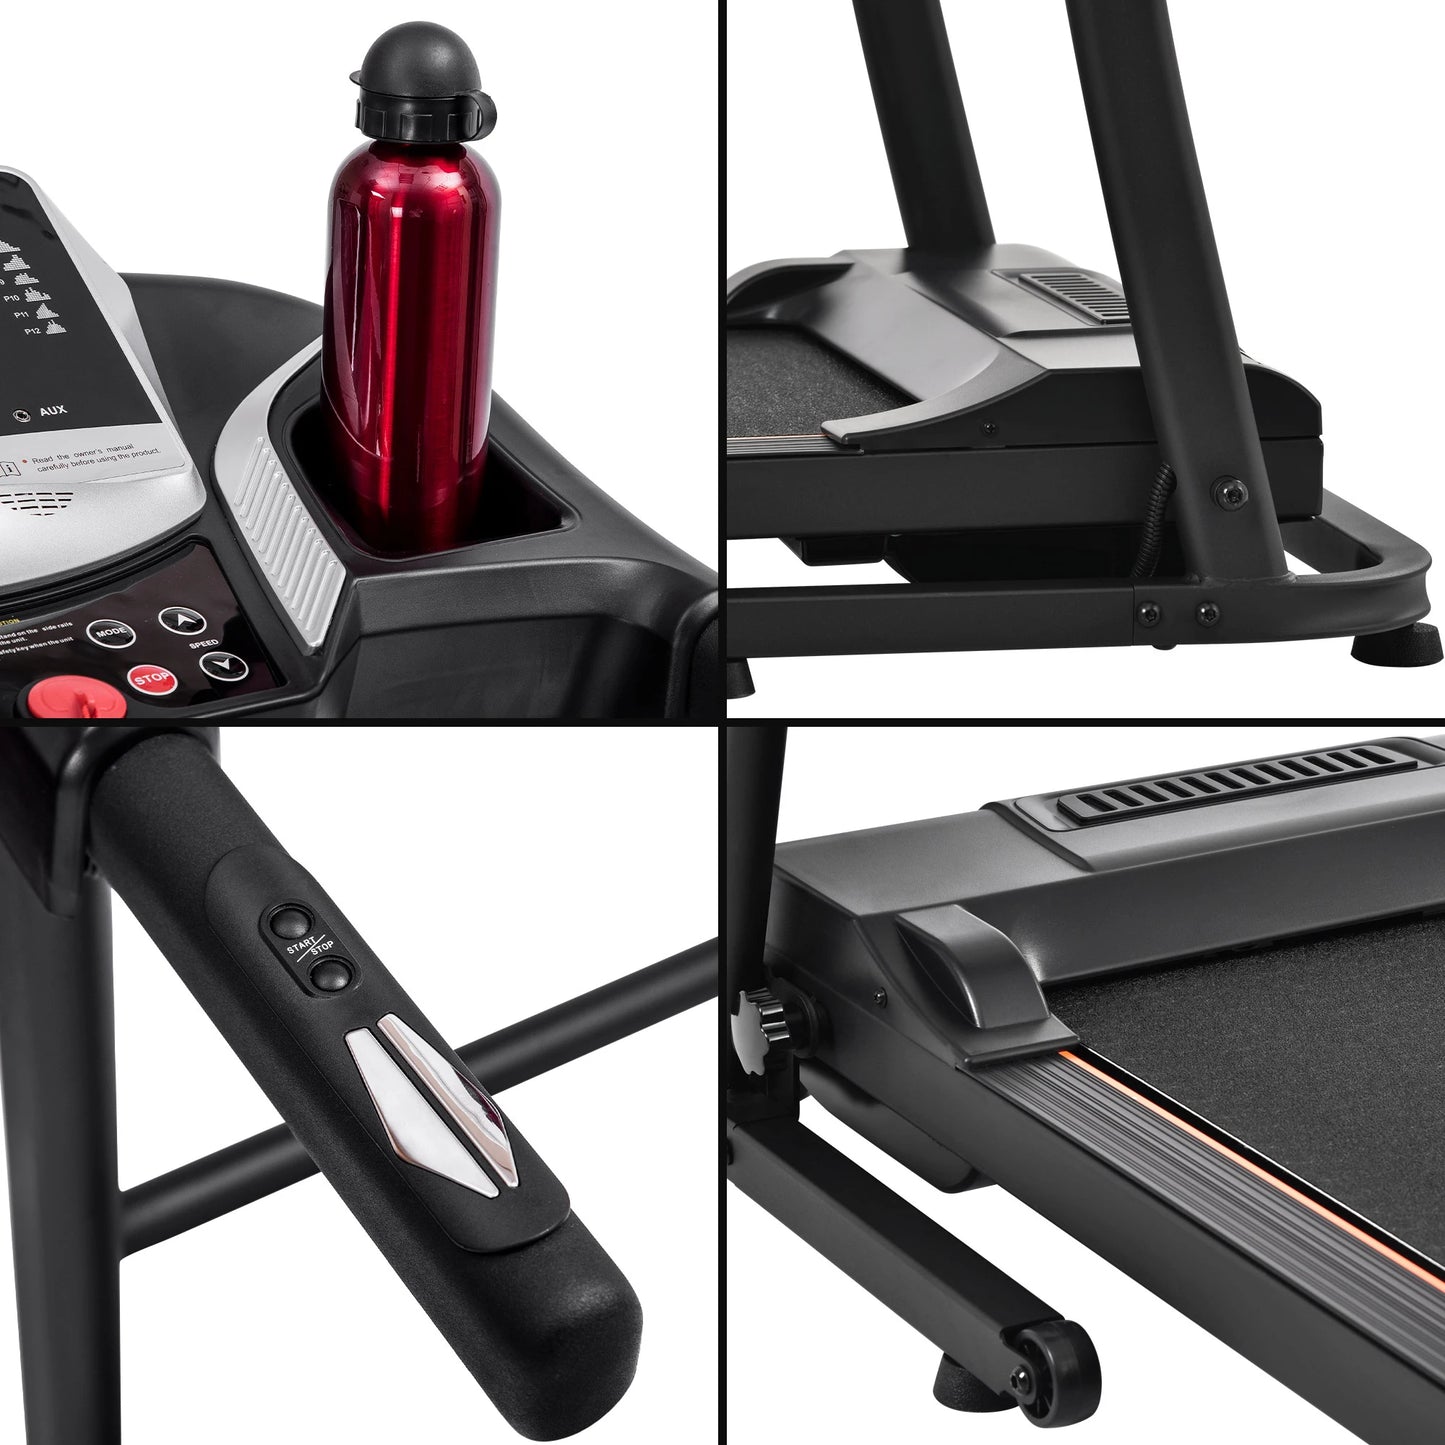 Folding Treadmill Electric Machine with 3 Level Incline 12 Preset Programs